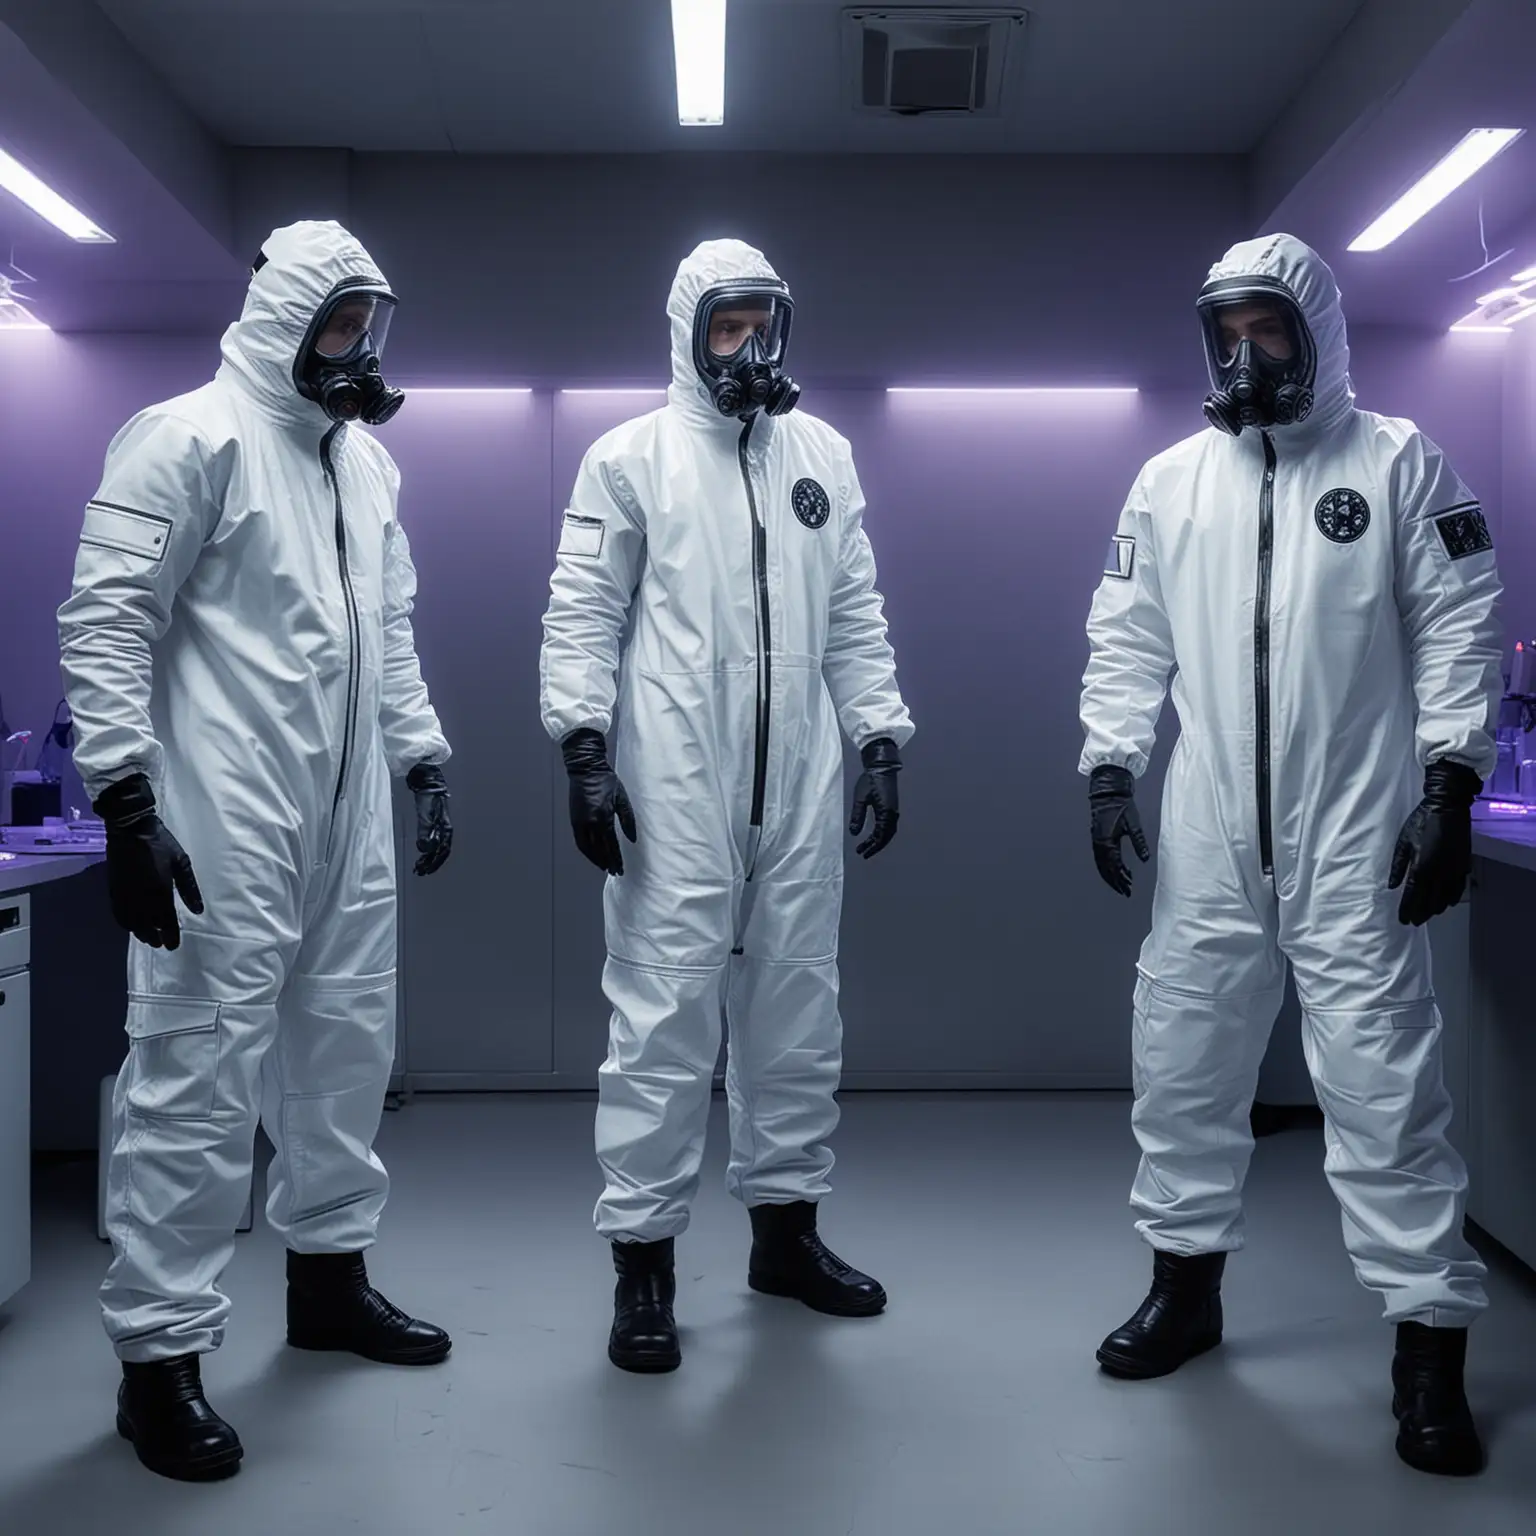 Futuristic Laboratory Scene with Bio Hazard Suits Under UV Light